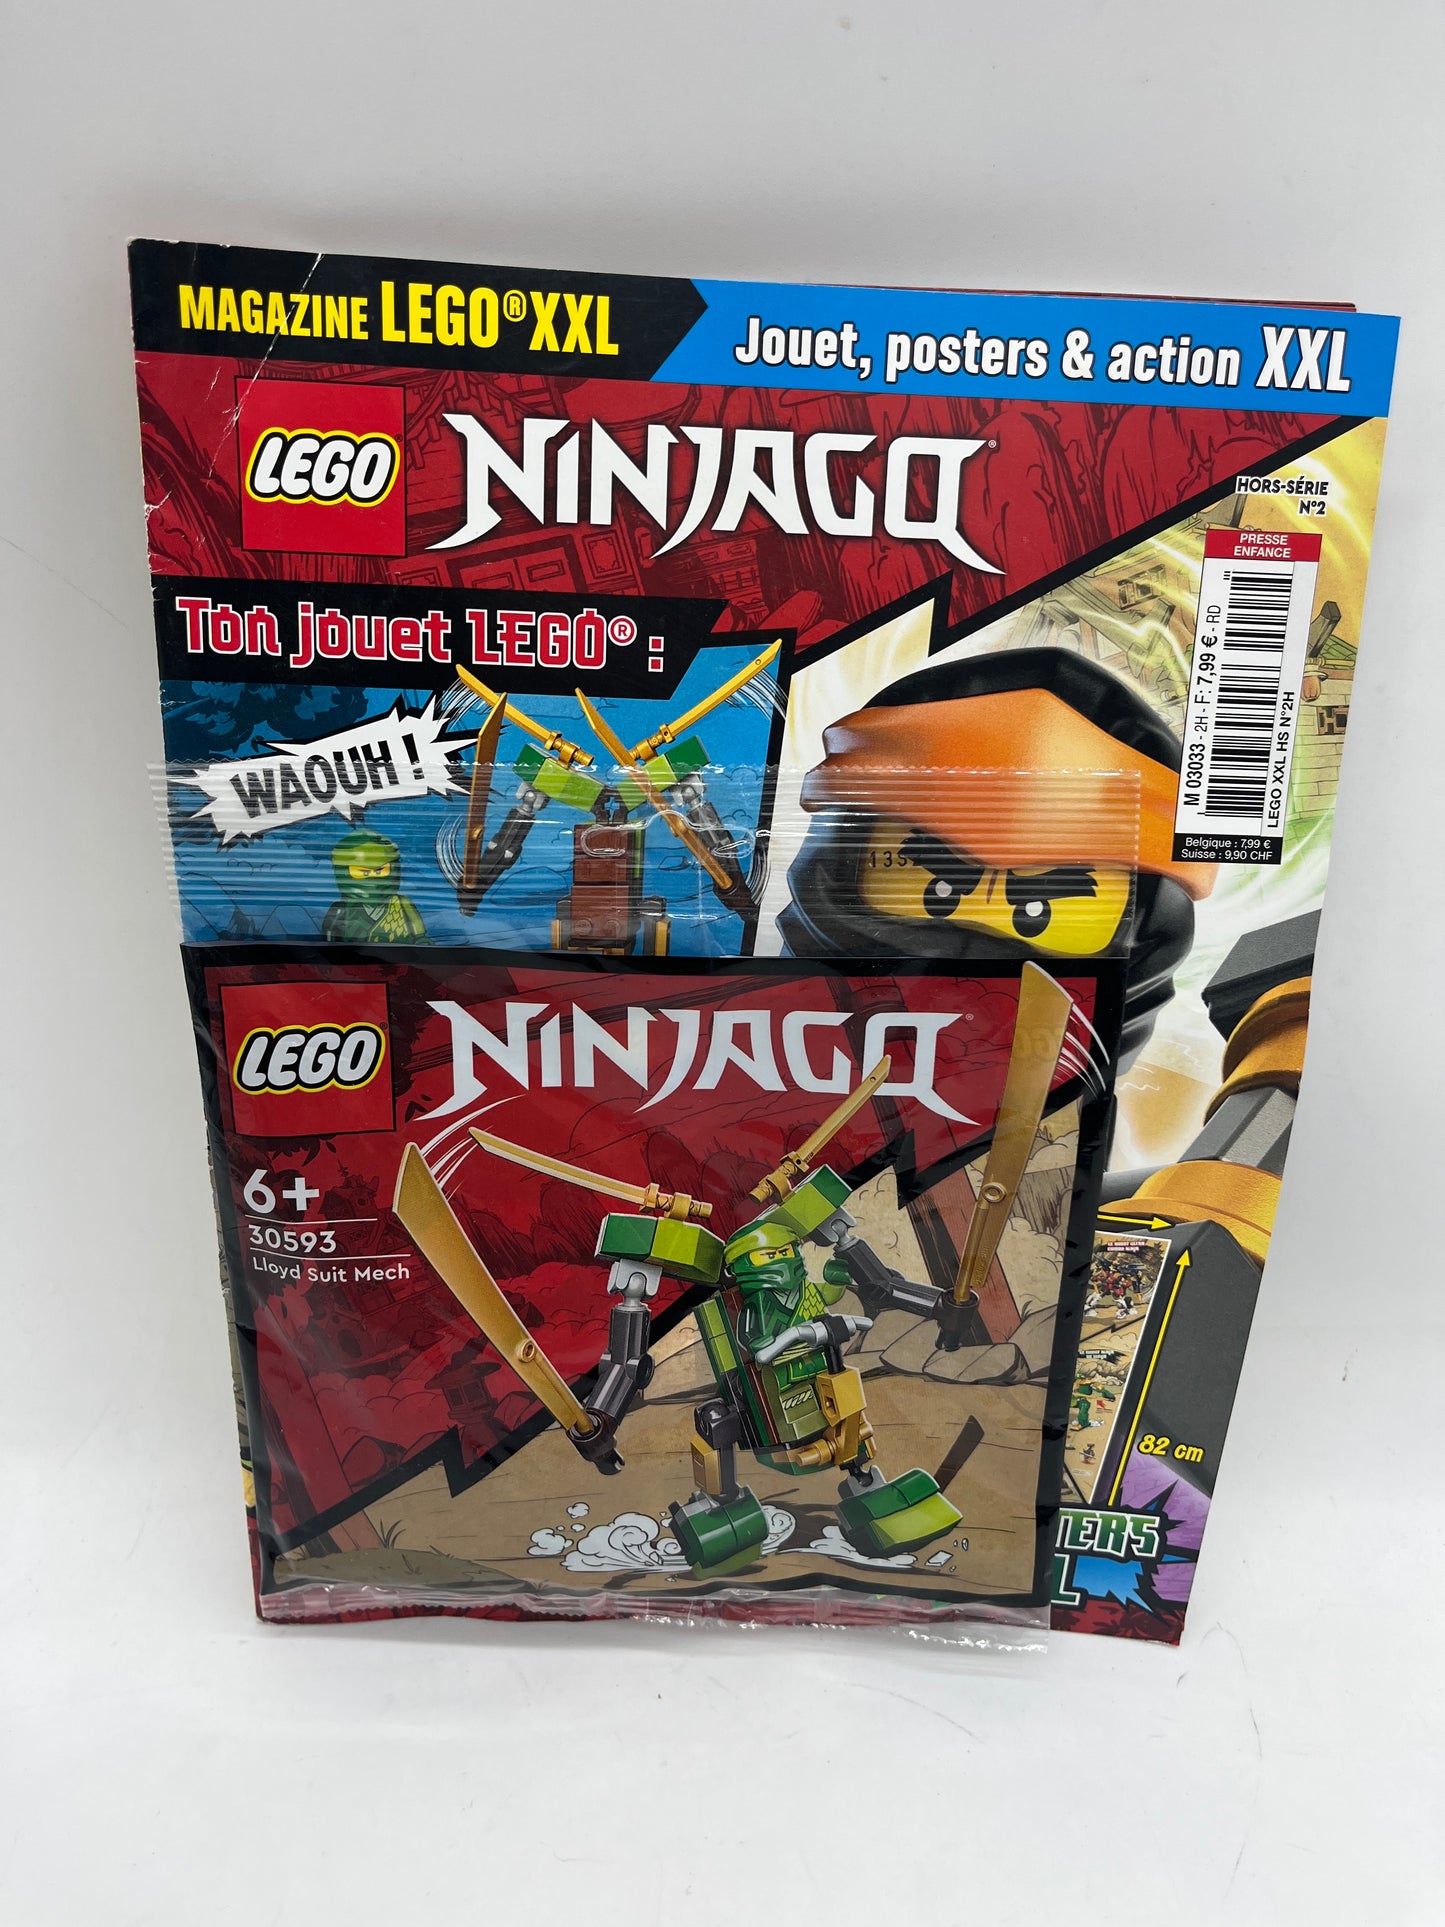 livre d’activité Magazine Lego Ninjago  avec sa mini figurine Lloyd suit mech   Neuf !